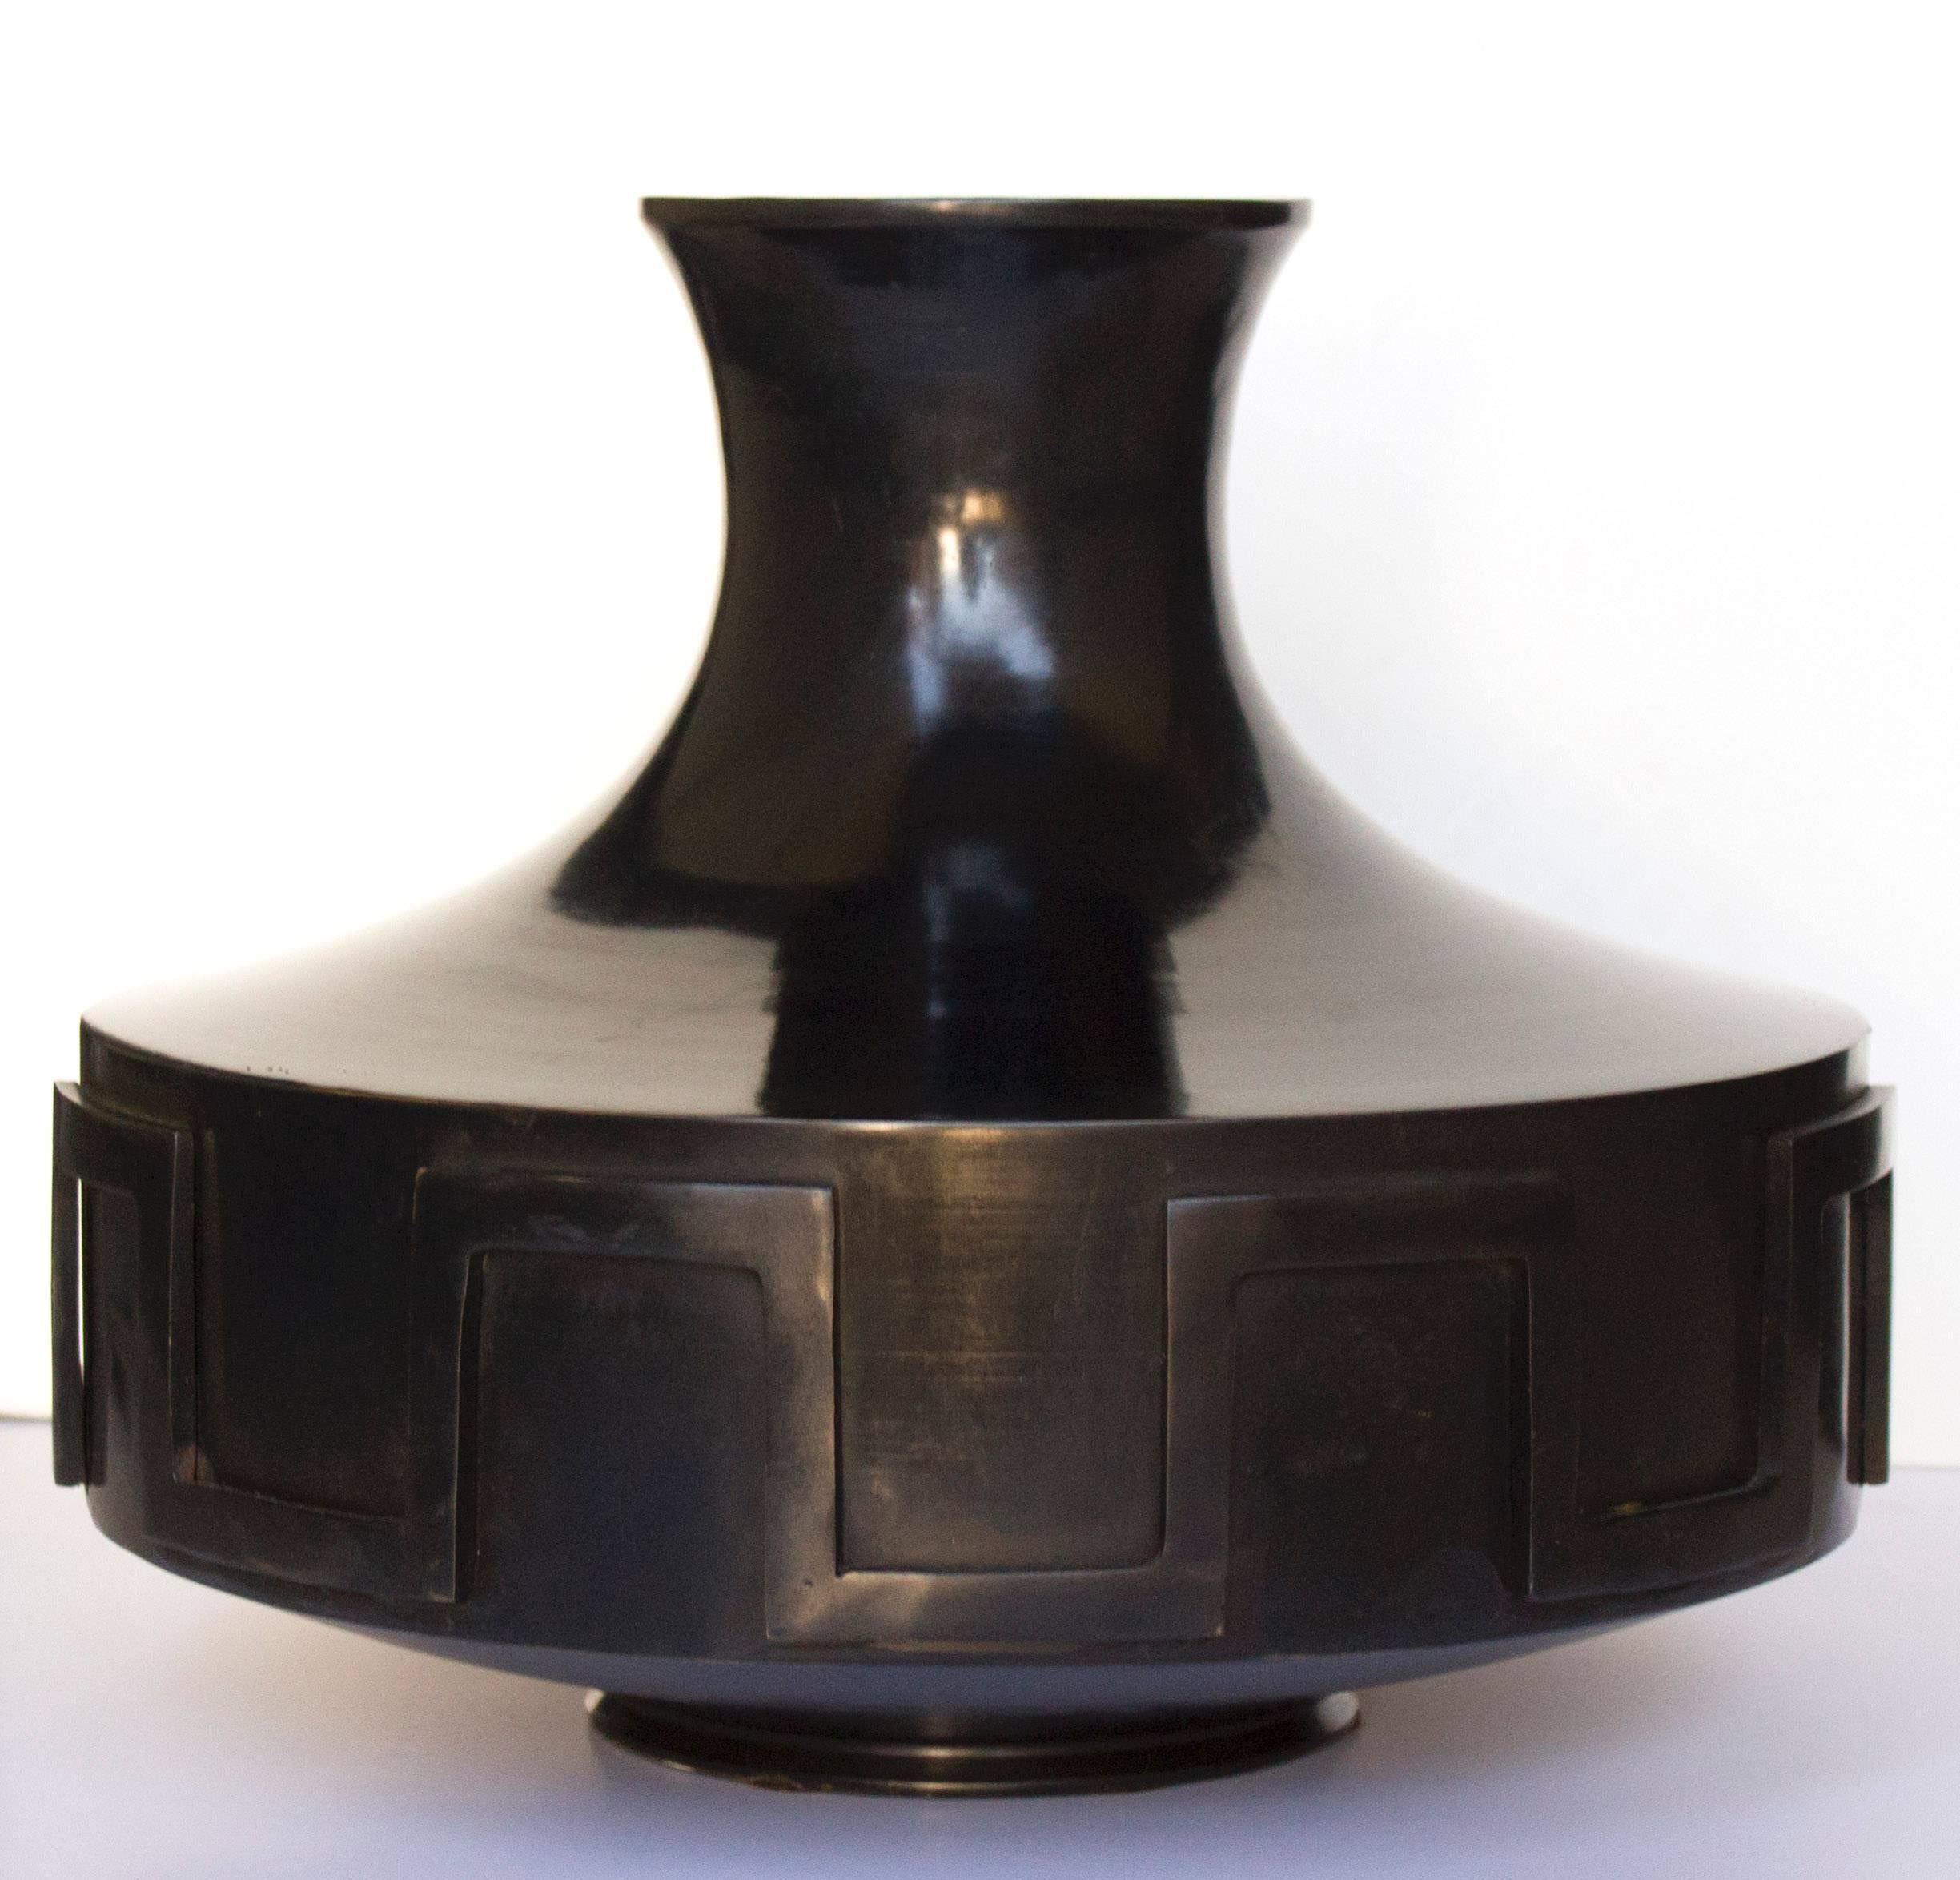 A Grecian style urn in dark bronze by Thomas Pheasant.